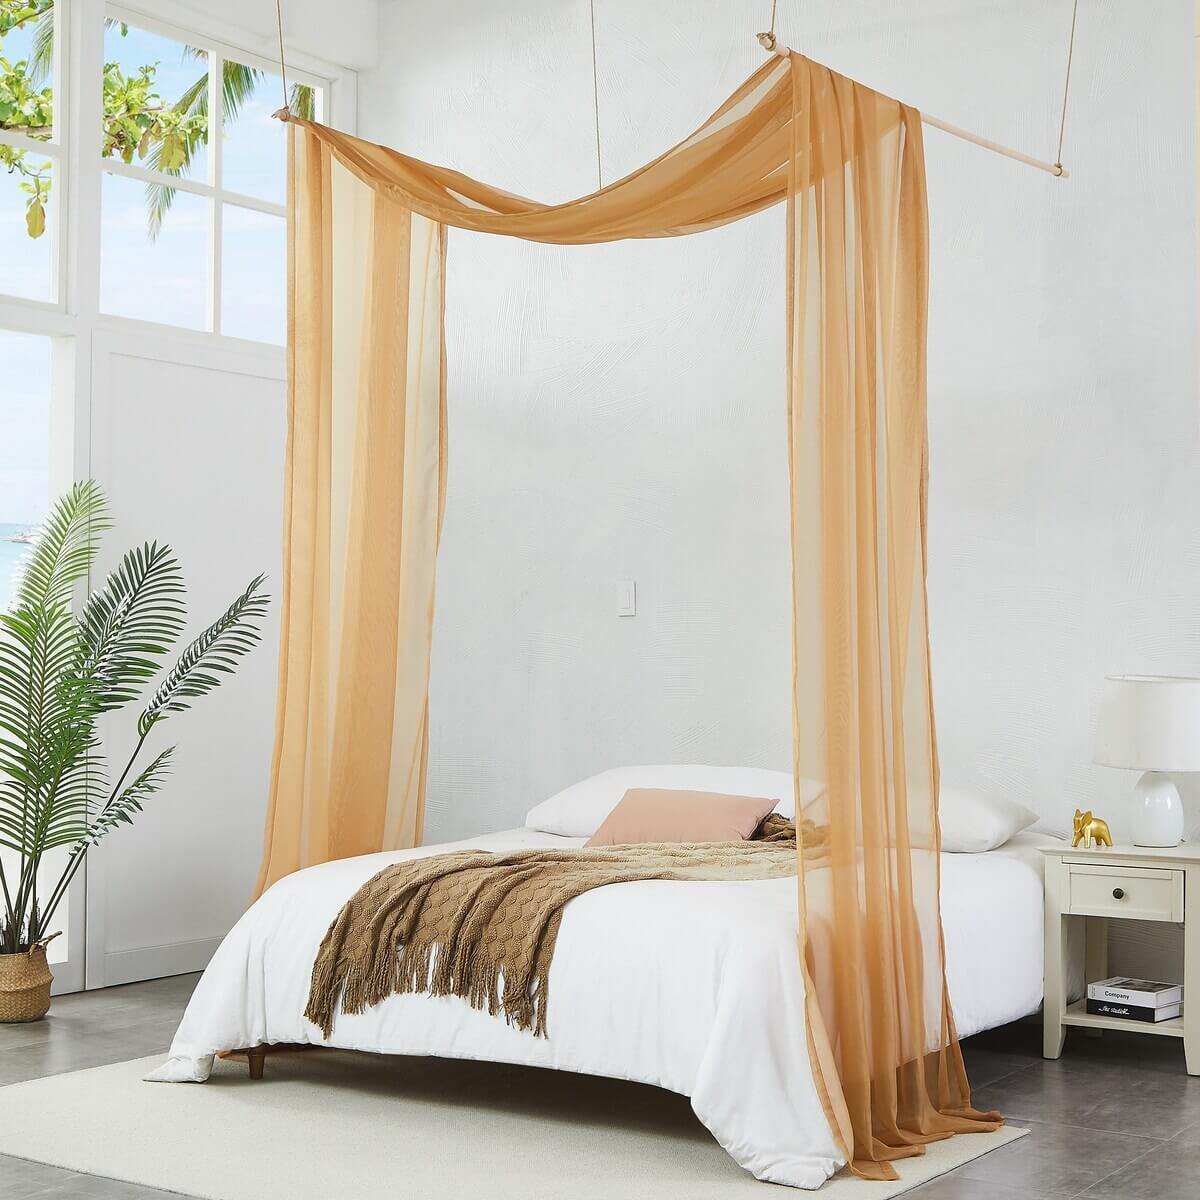 simple canopy bedroom dorm room ideas